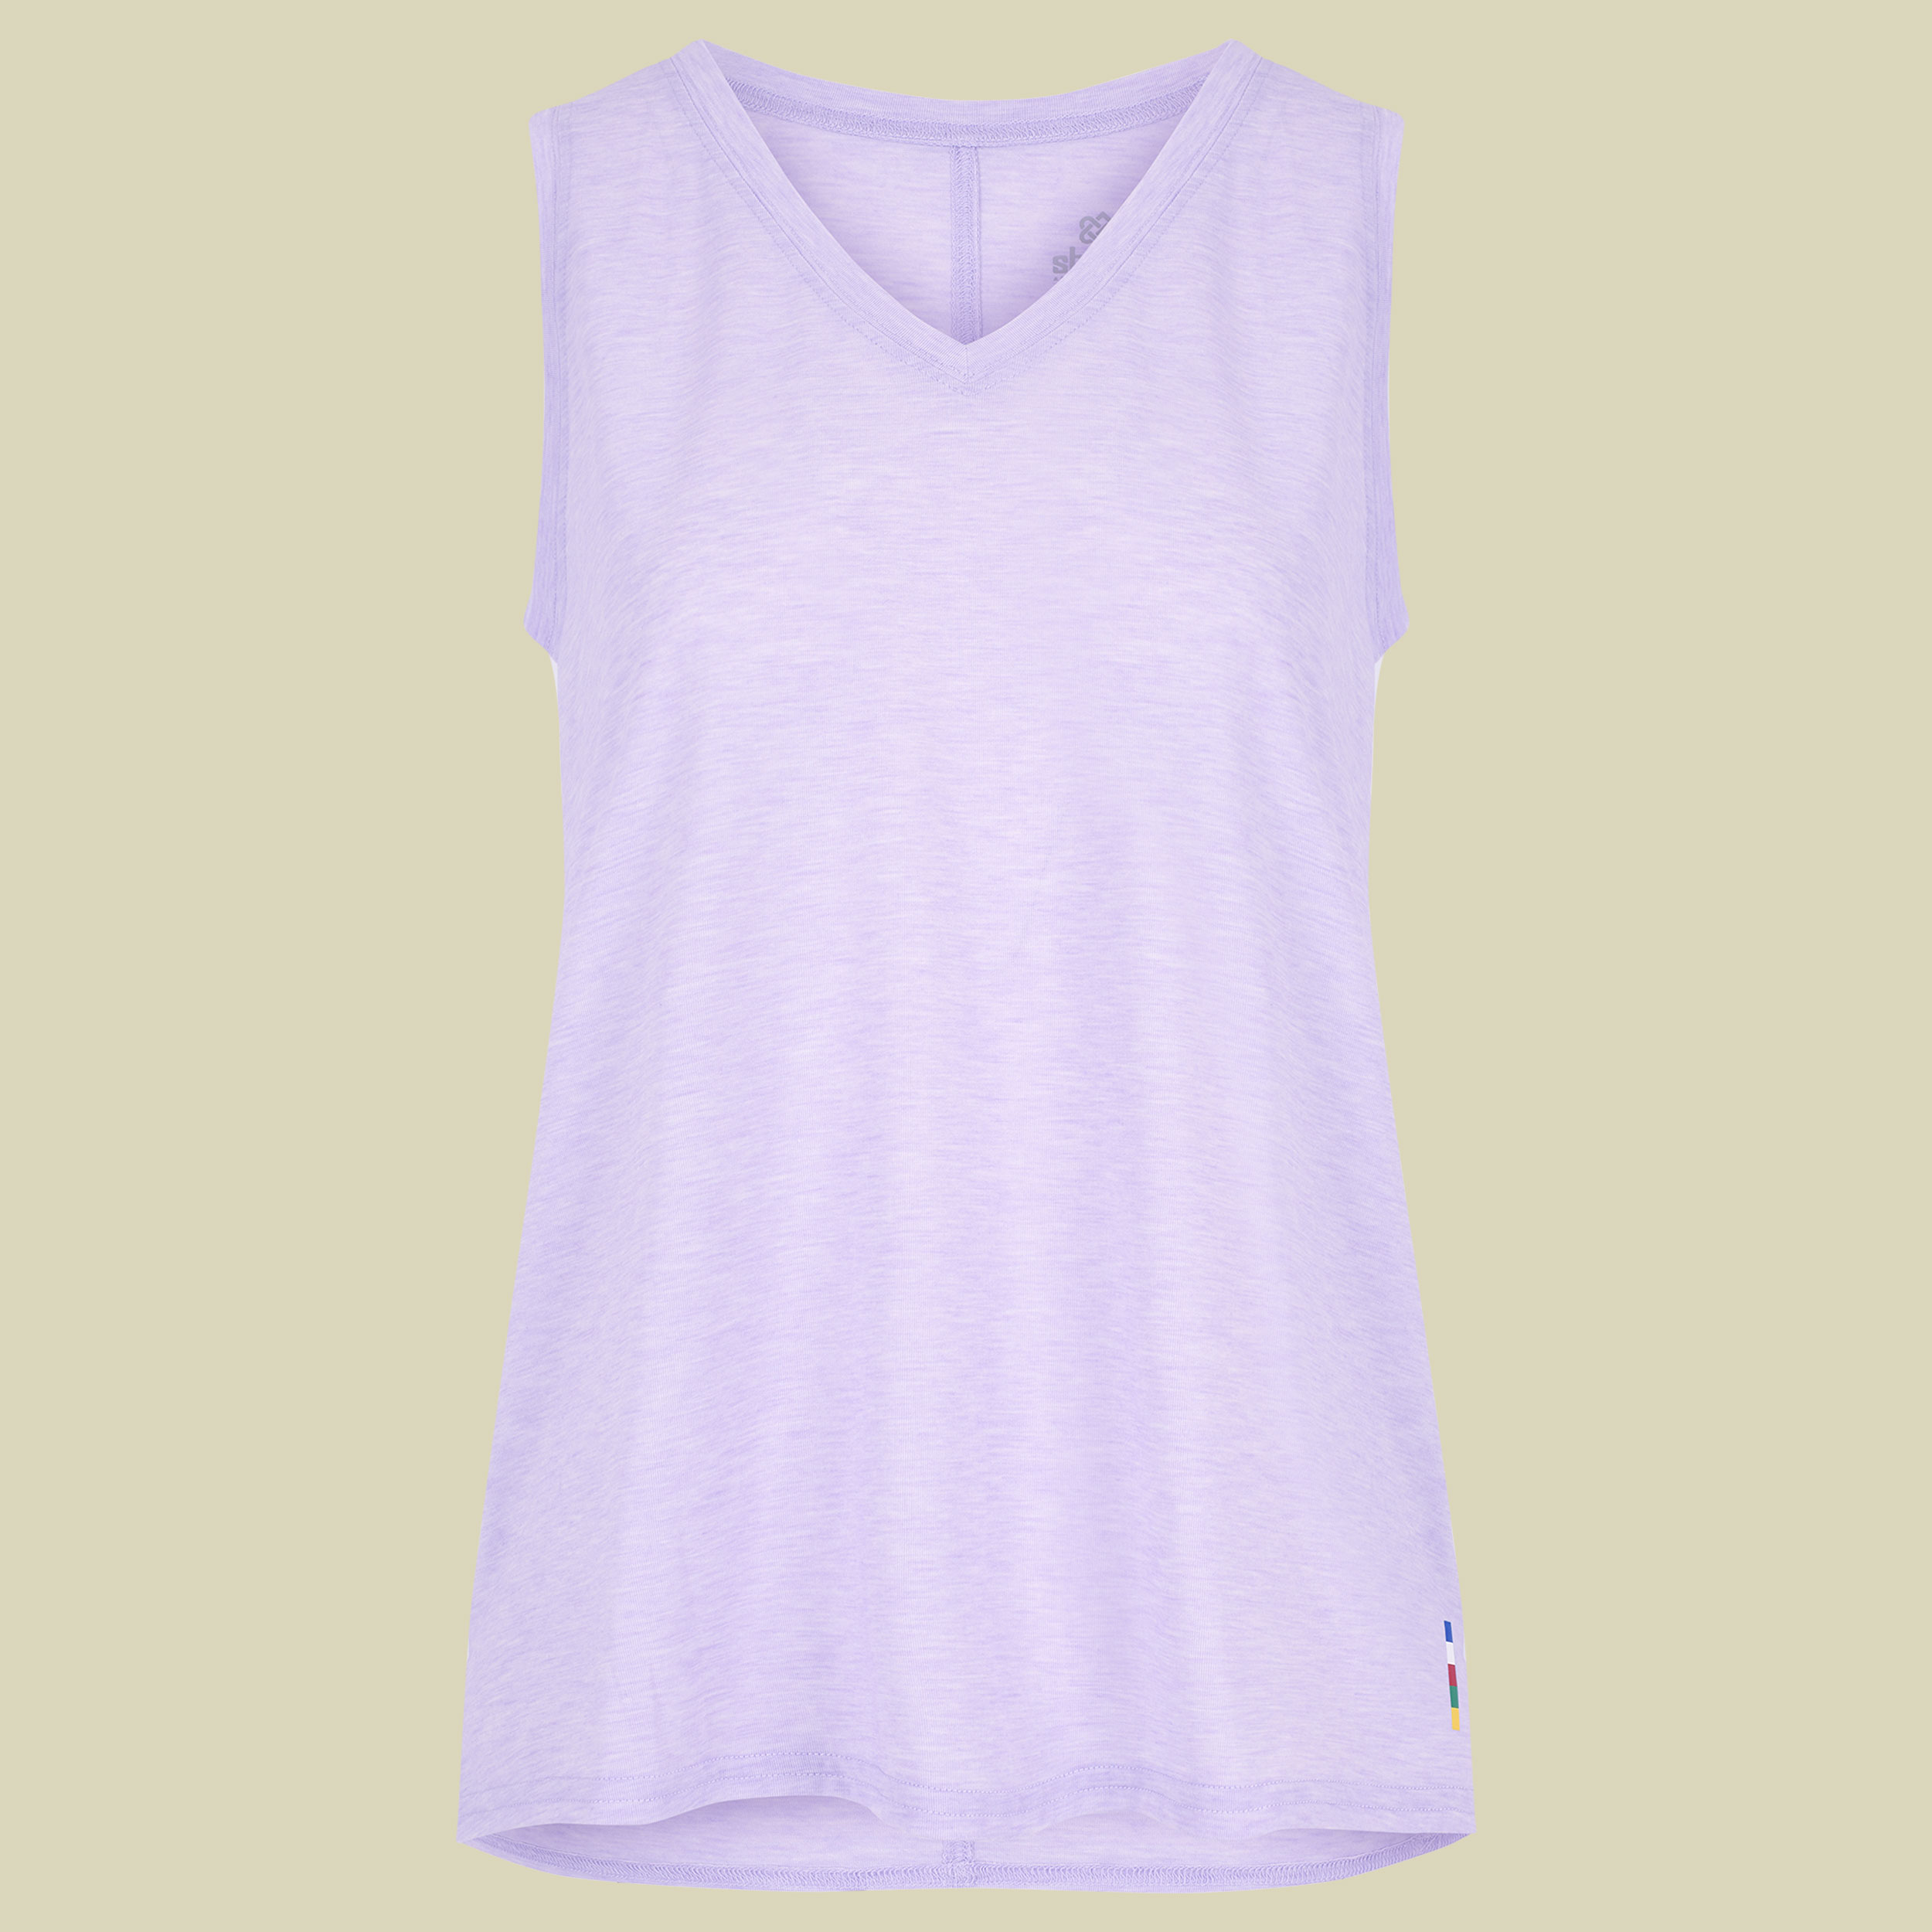 Asha v-neck tank women XL lila - Farbe lavender